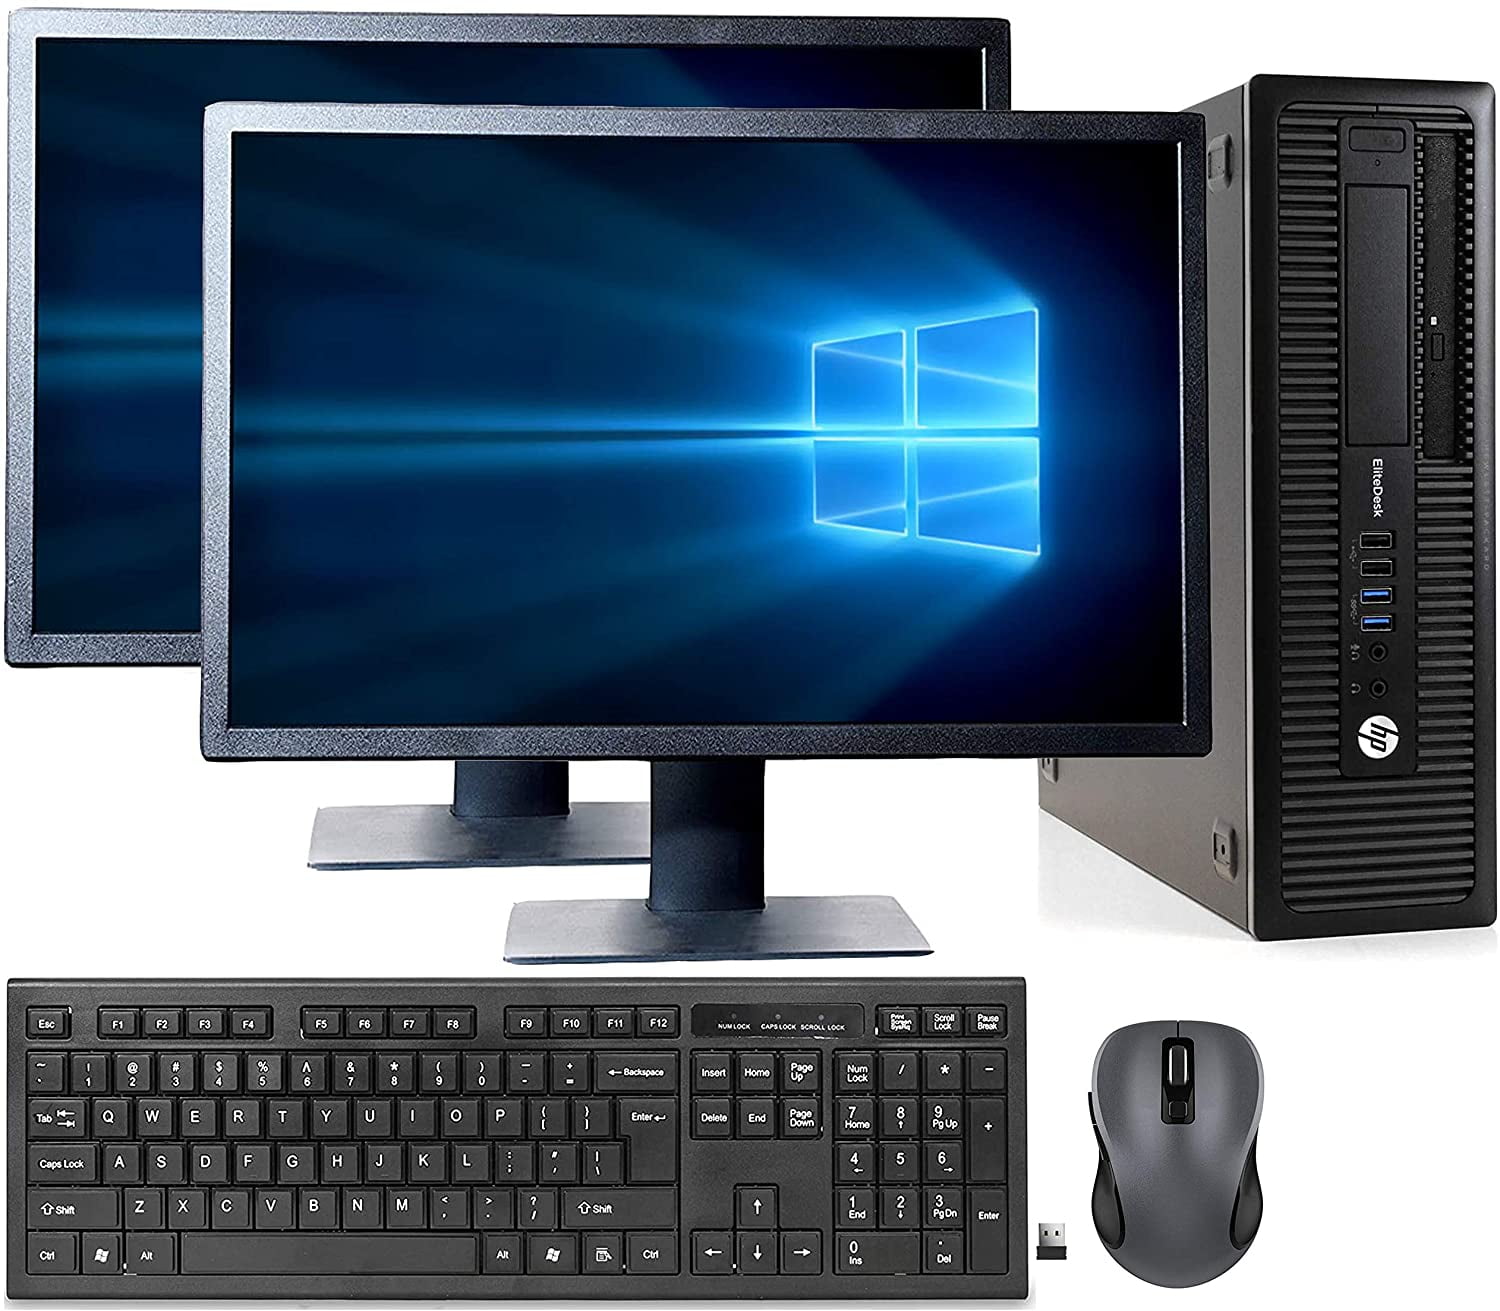 HP 800 G1 SFF Computer Desktop PC, Intel Core i7 3.4GHz Processor, 16GB  Ram, 128GB M.2 SSD, 1TB HDD, BTO Wireless Keyboard  Mouse, Wifi, New Bto  Dual 23.8